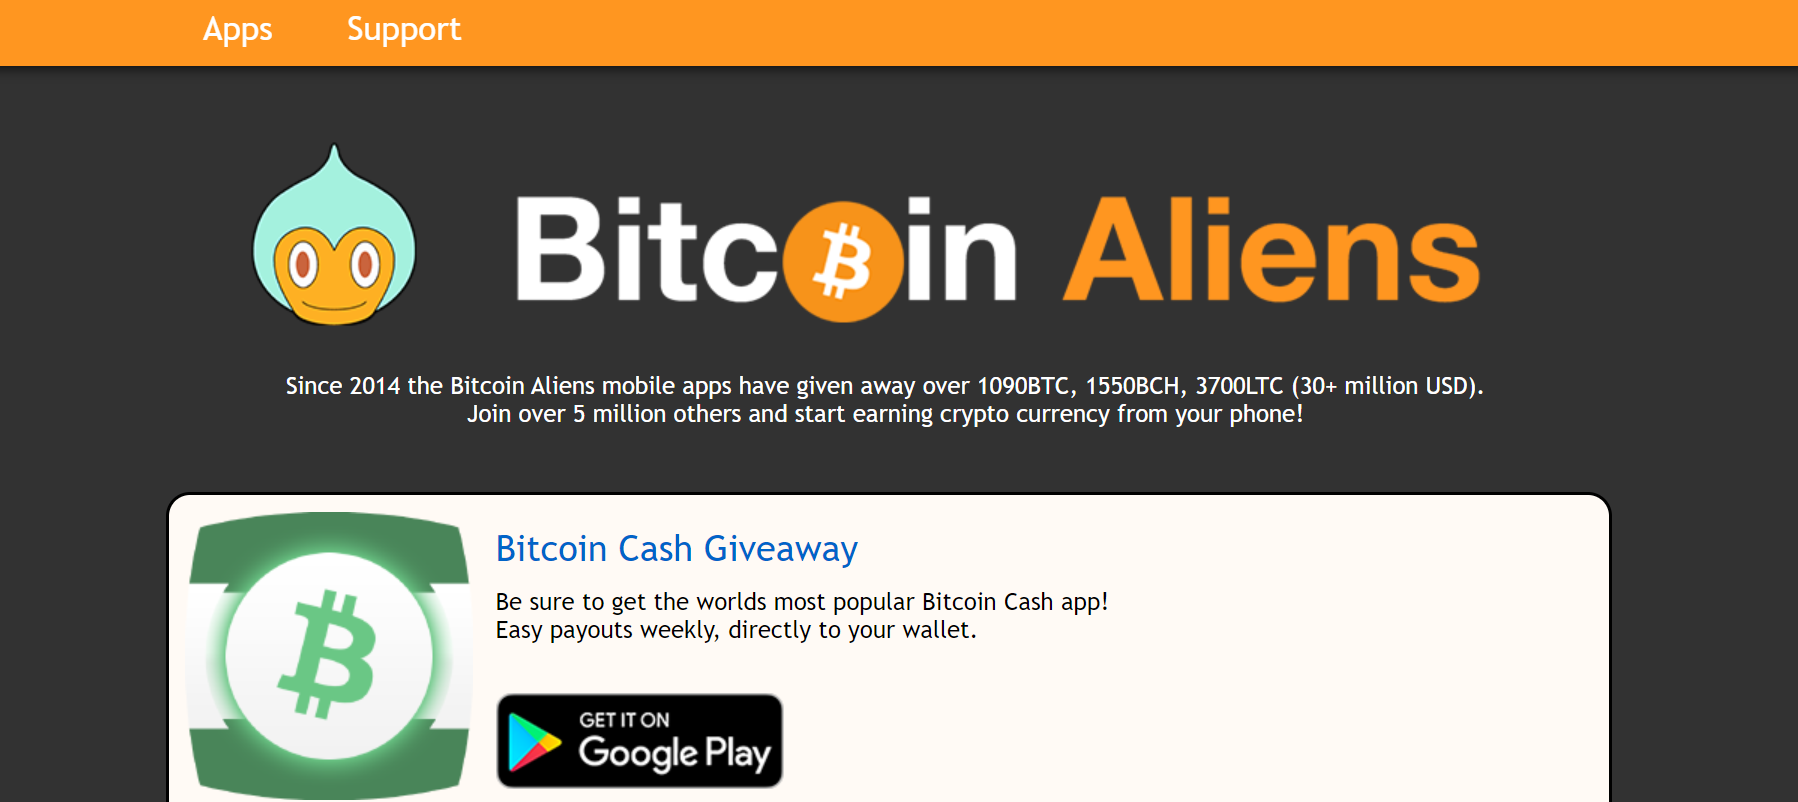 Bitcoin Aliens.com